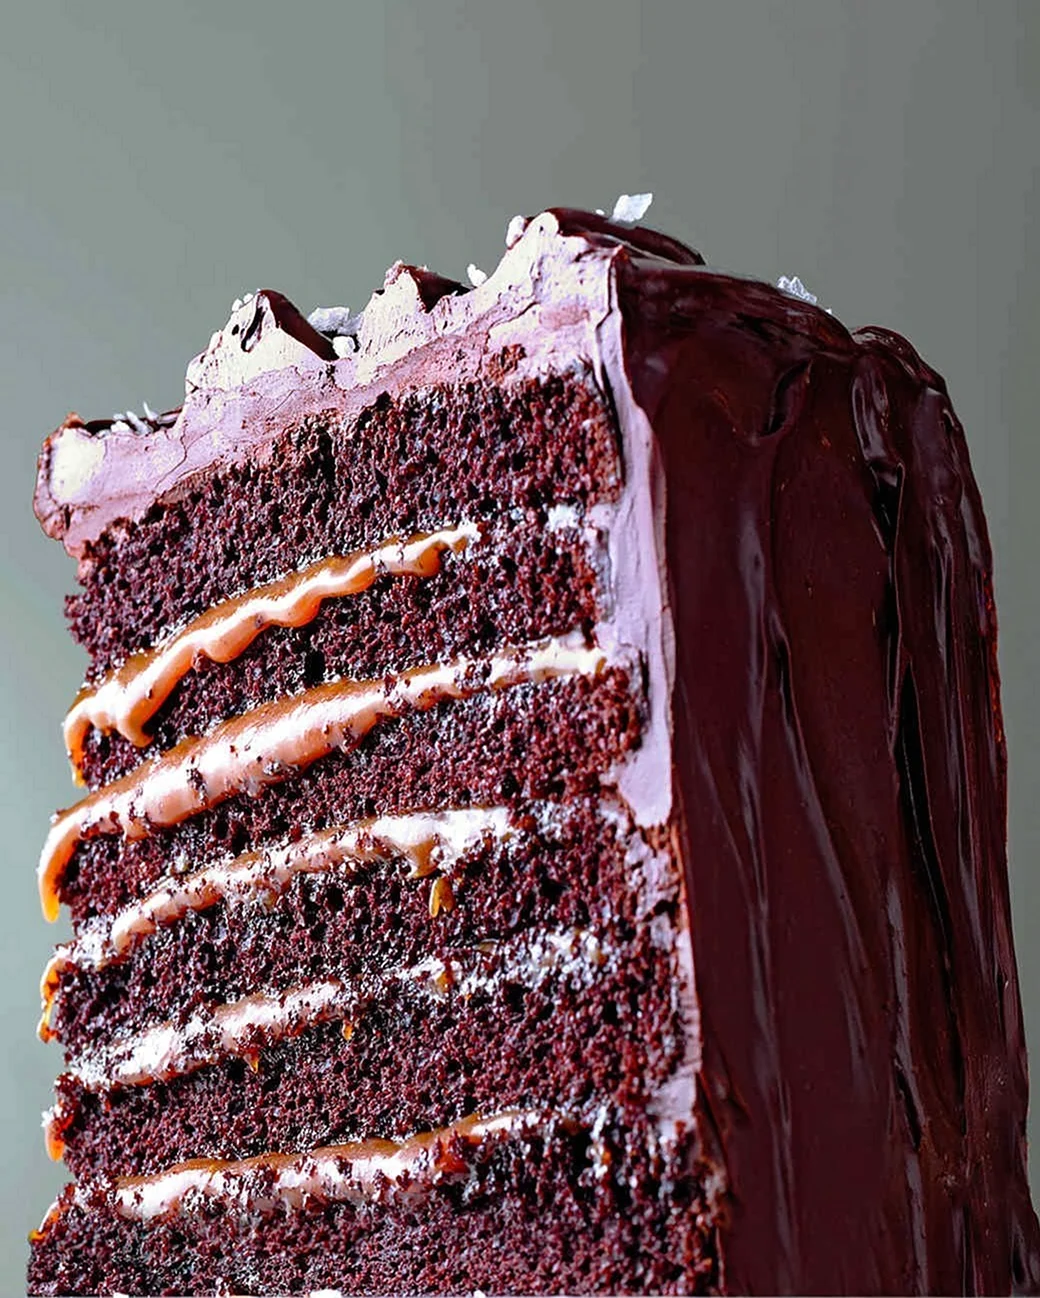 Чоколейт кейк. Красивая картинка